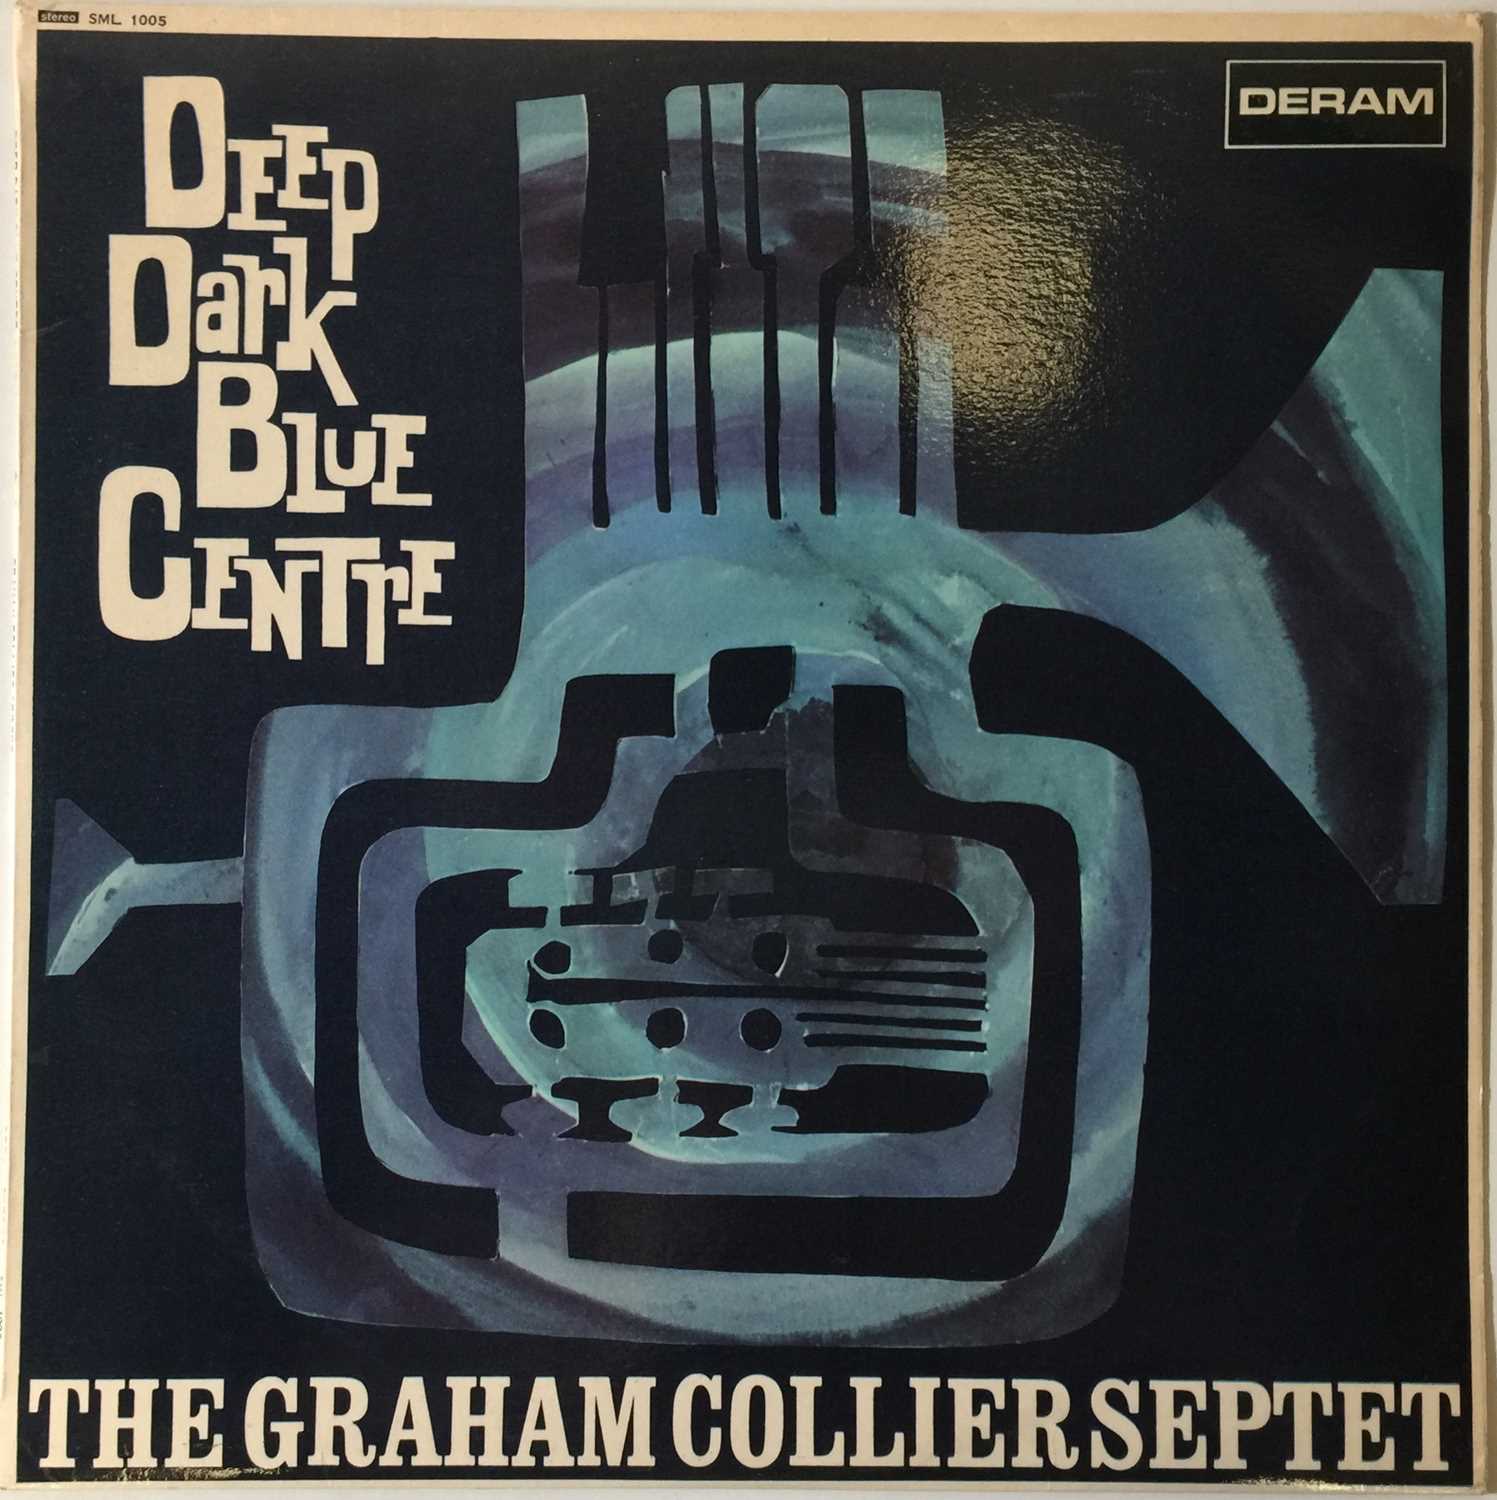 THE GRAHAM COLLIER SEPTET - DEEP DARK BLUE CENTRE LP (UK DERAM - SML 1005) - Image 2 of 5